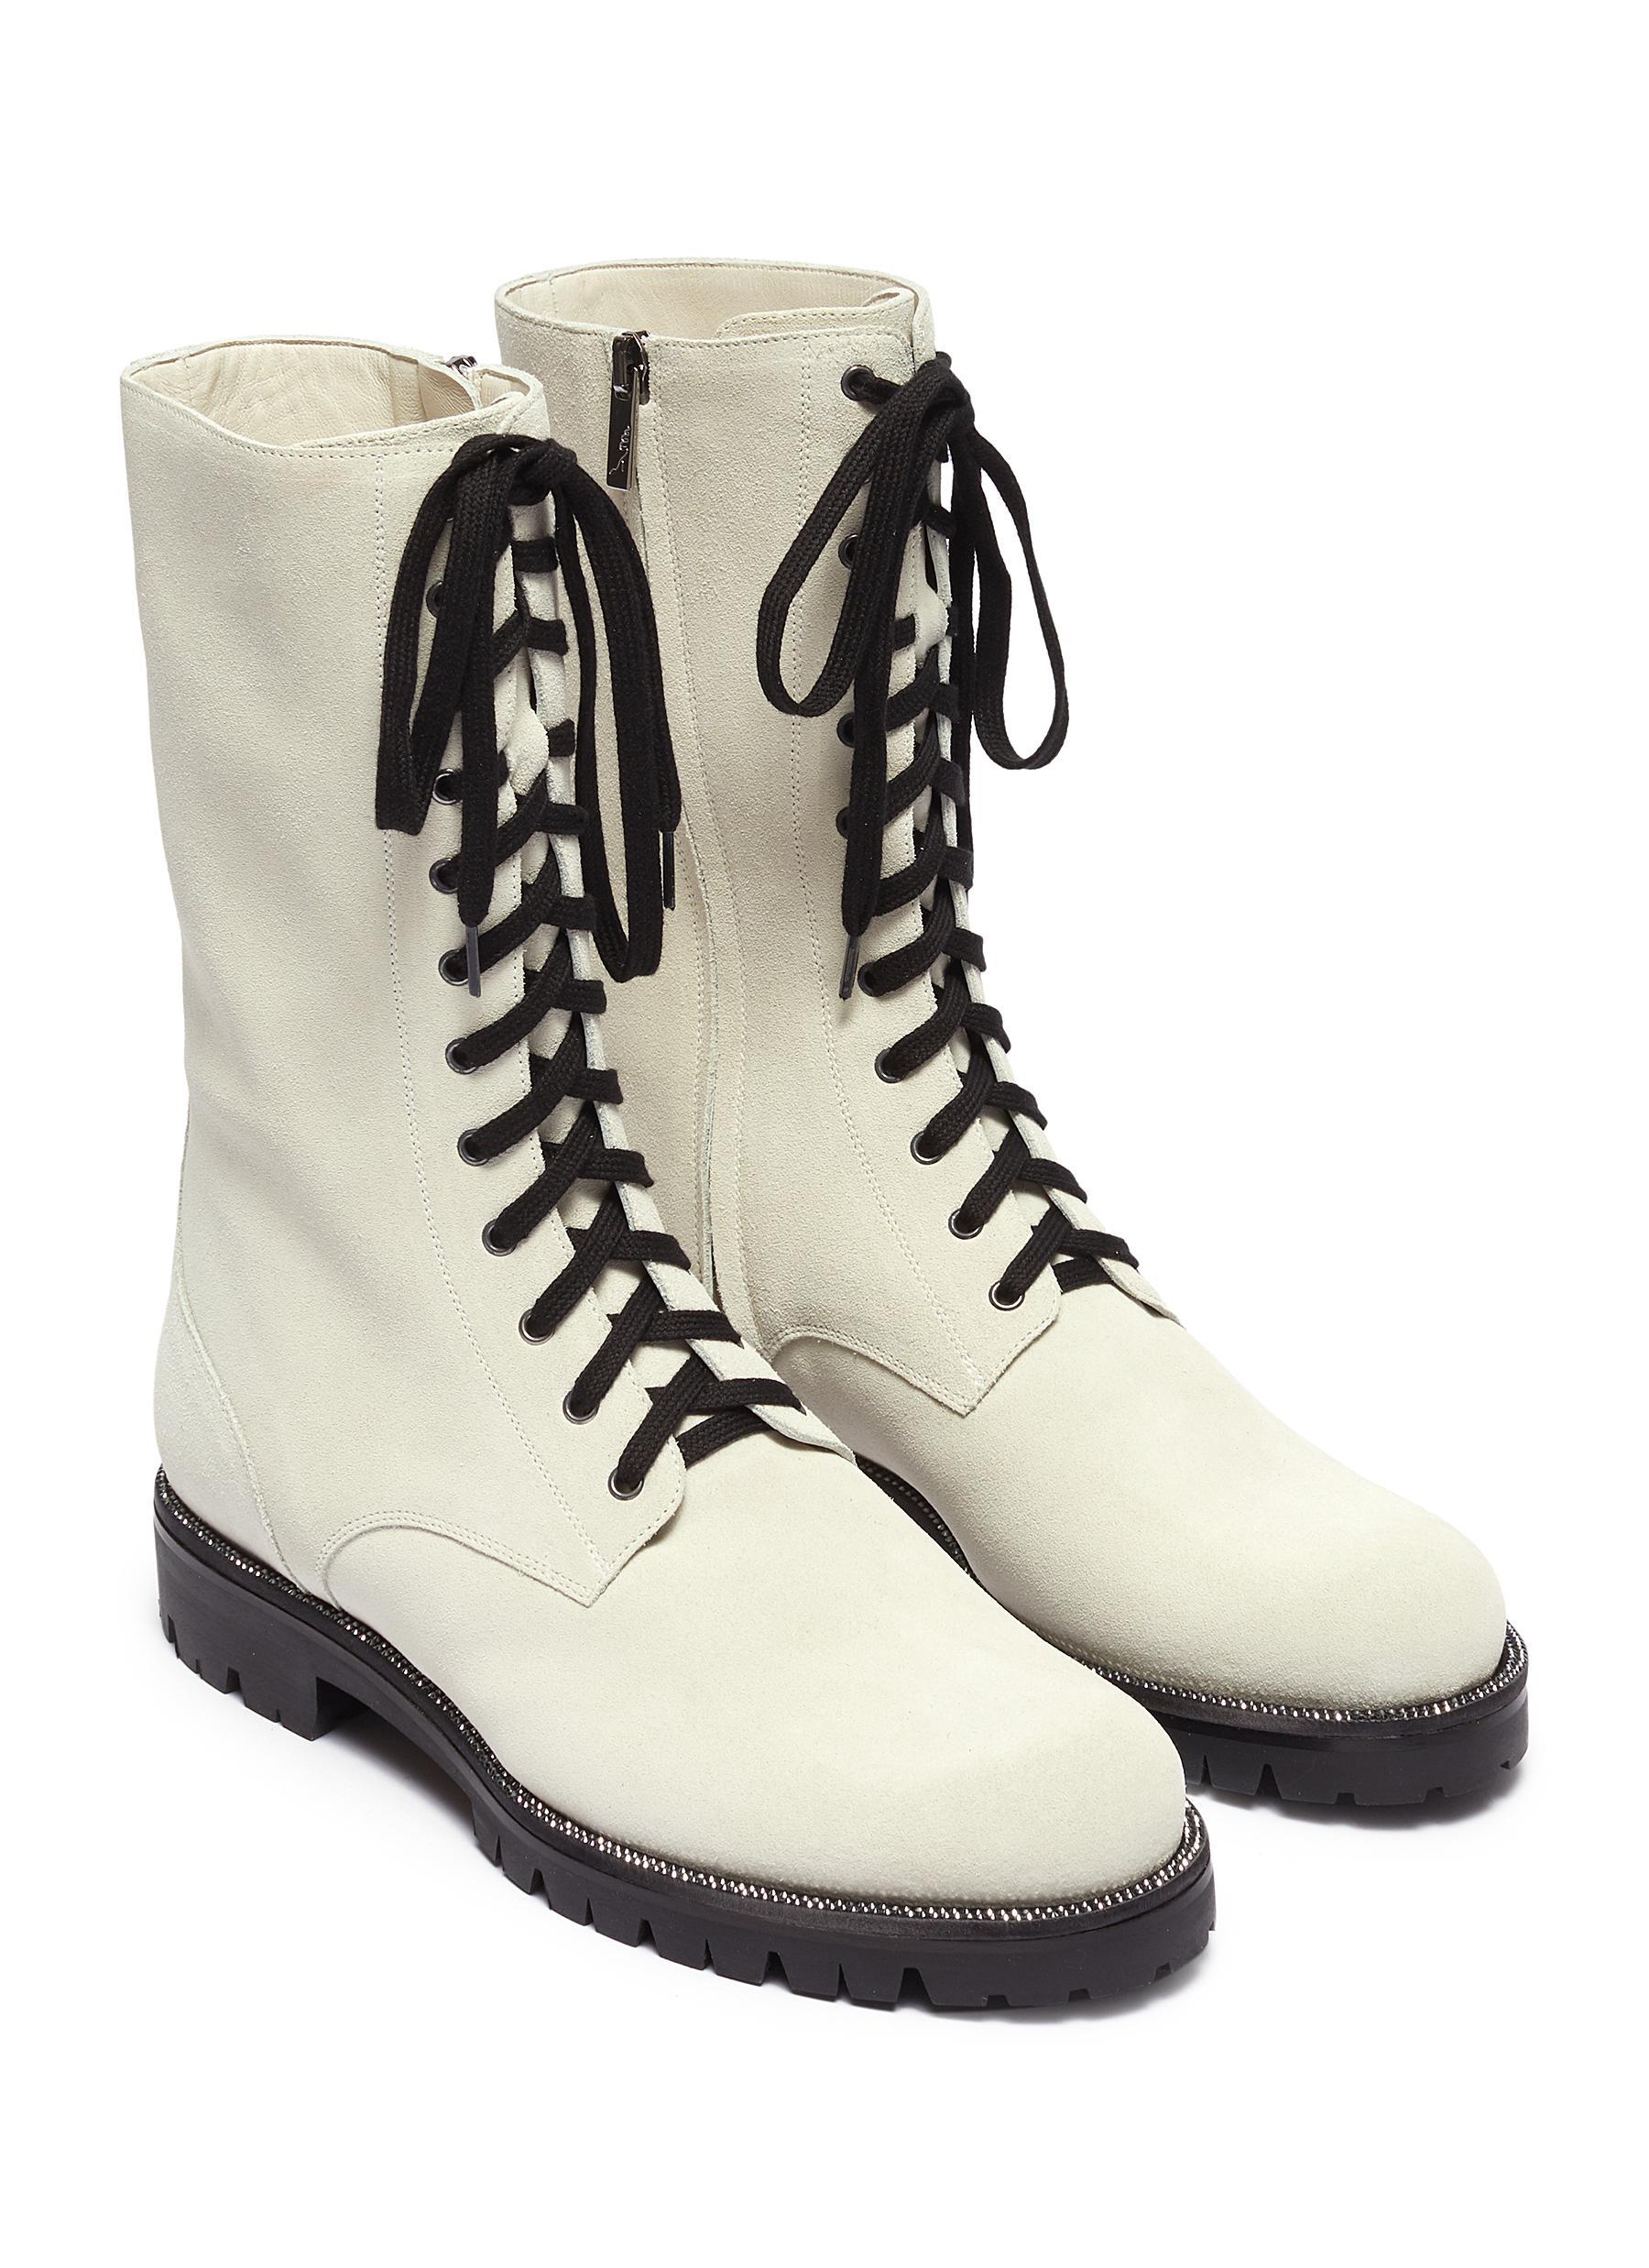 Rene Caovilla Leather Combat Boots in White - Lyst